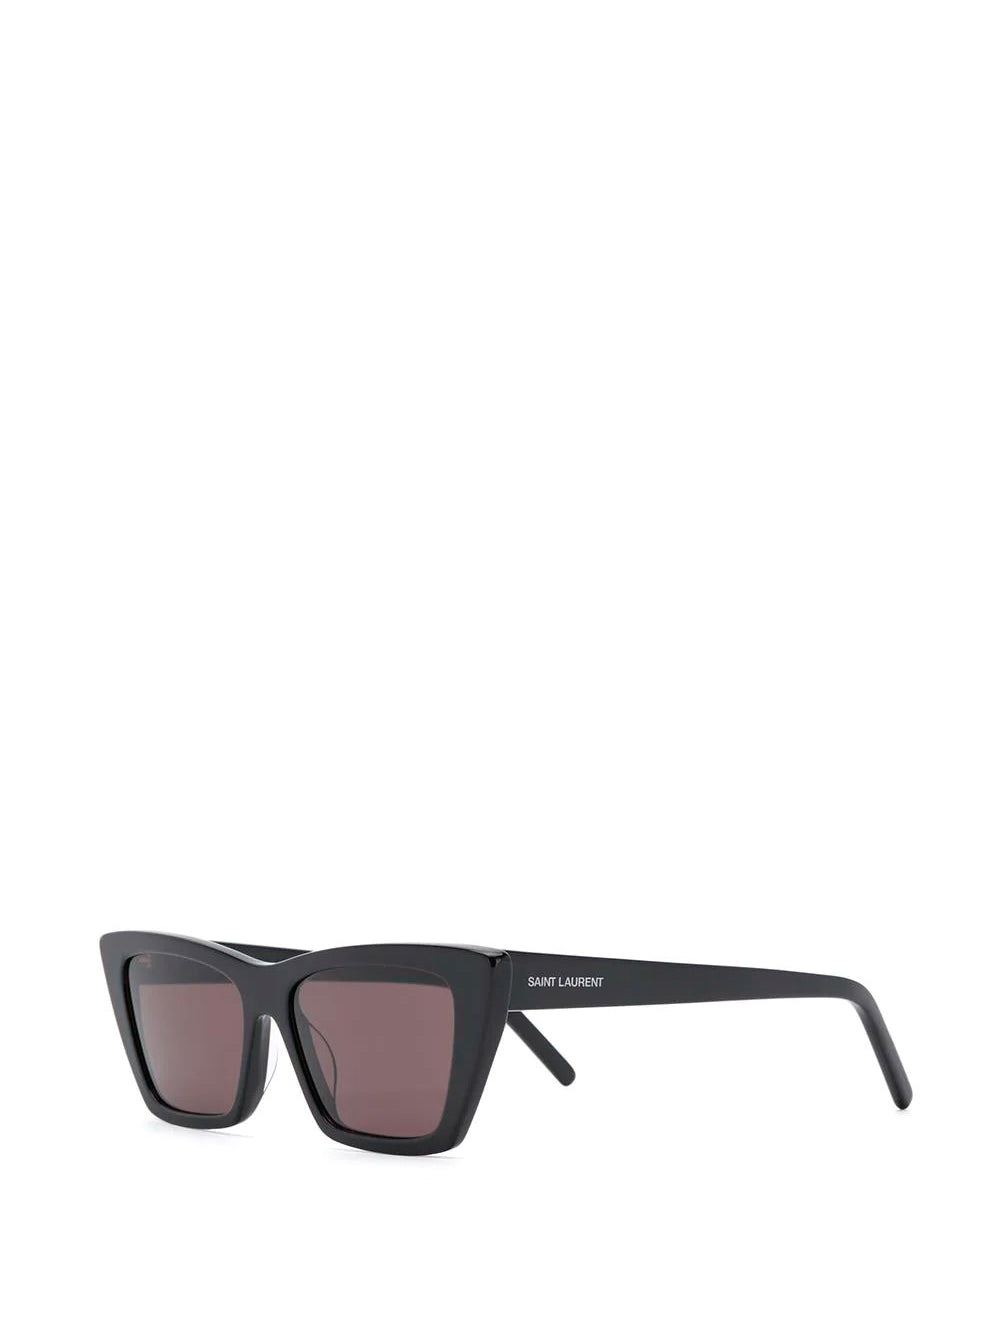 New Wave SL 276 sunglasses